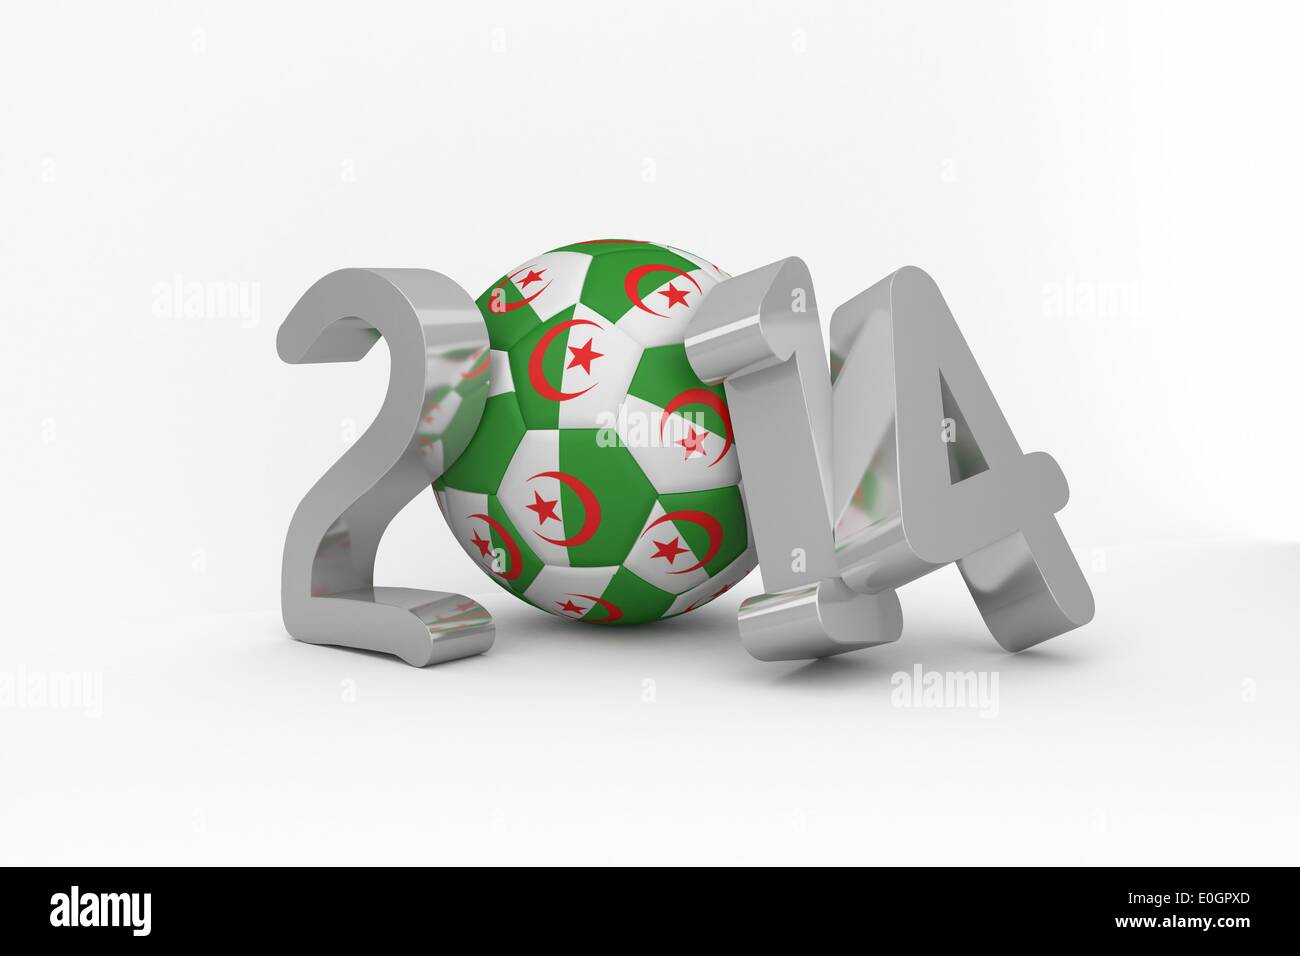 Algeria world cup 2014 Stock Photo